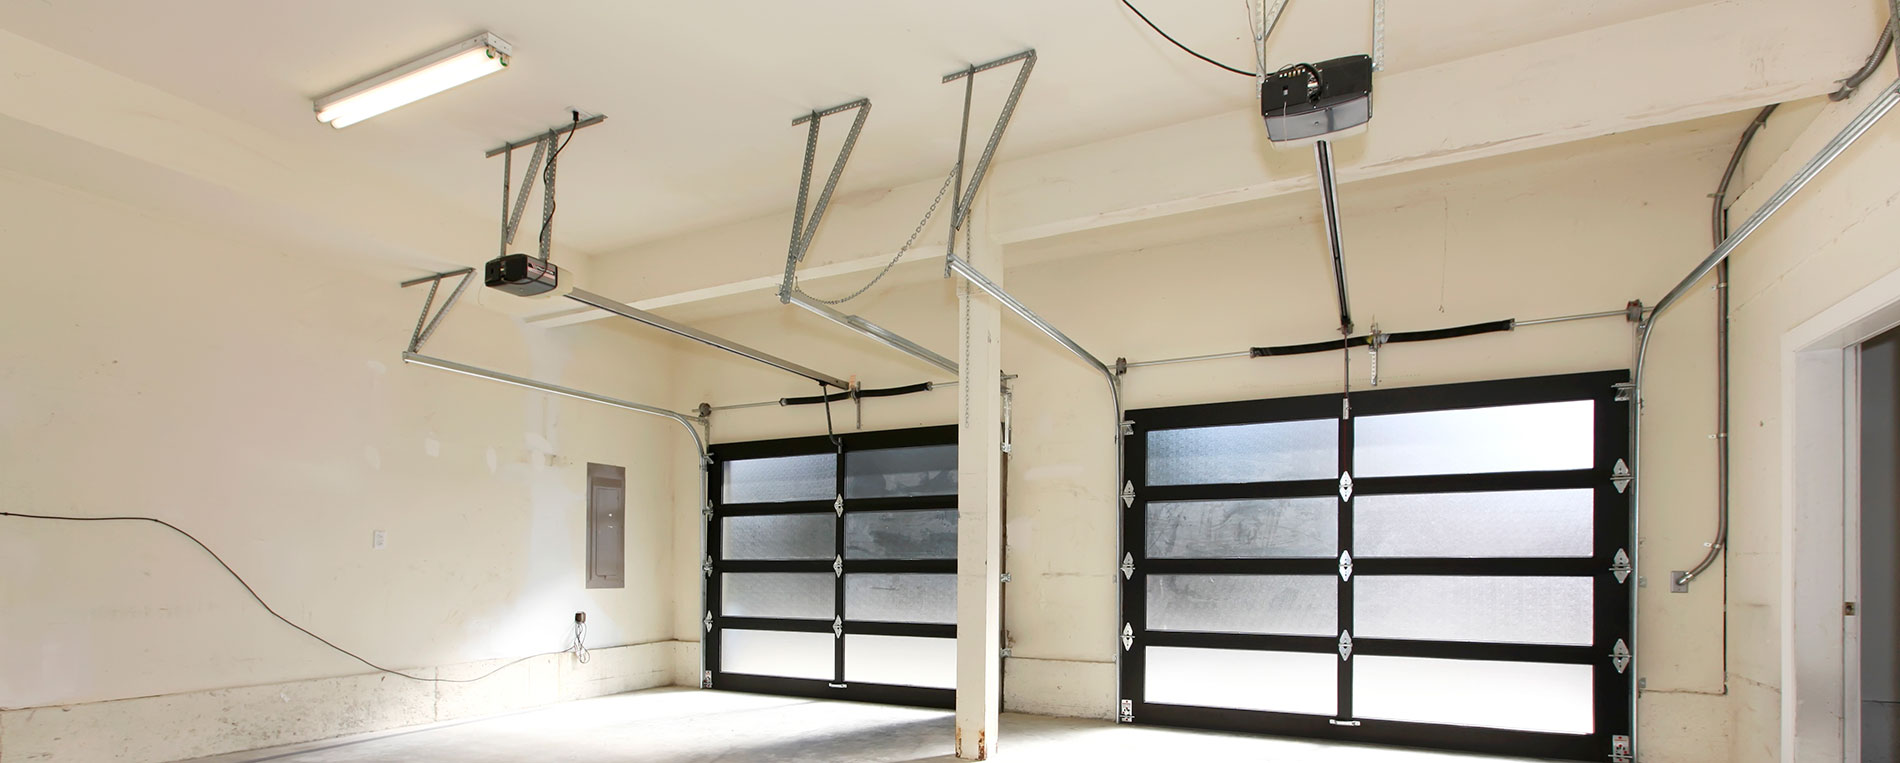 New Garage Door Installation In La Palma